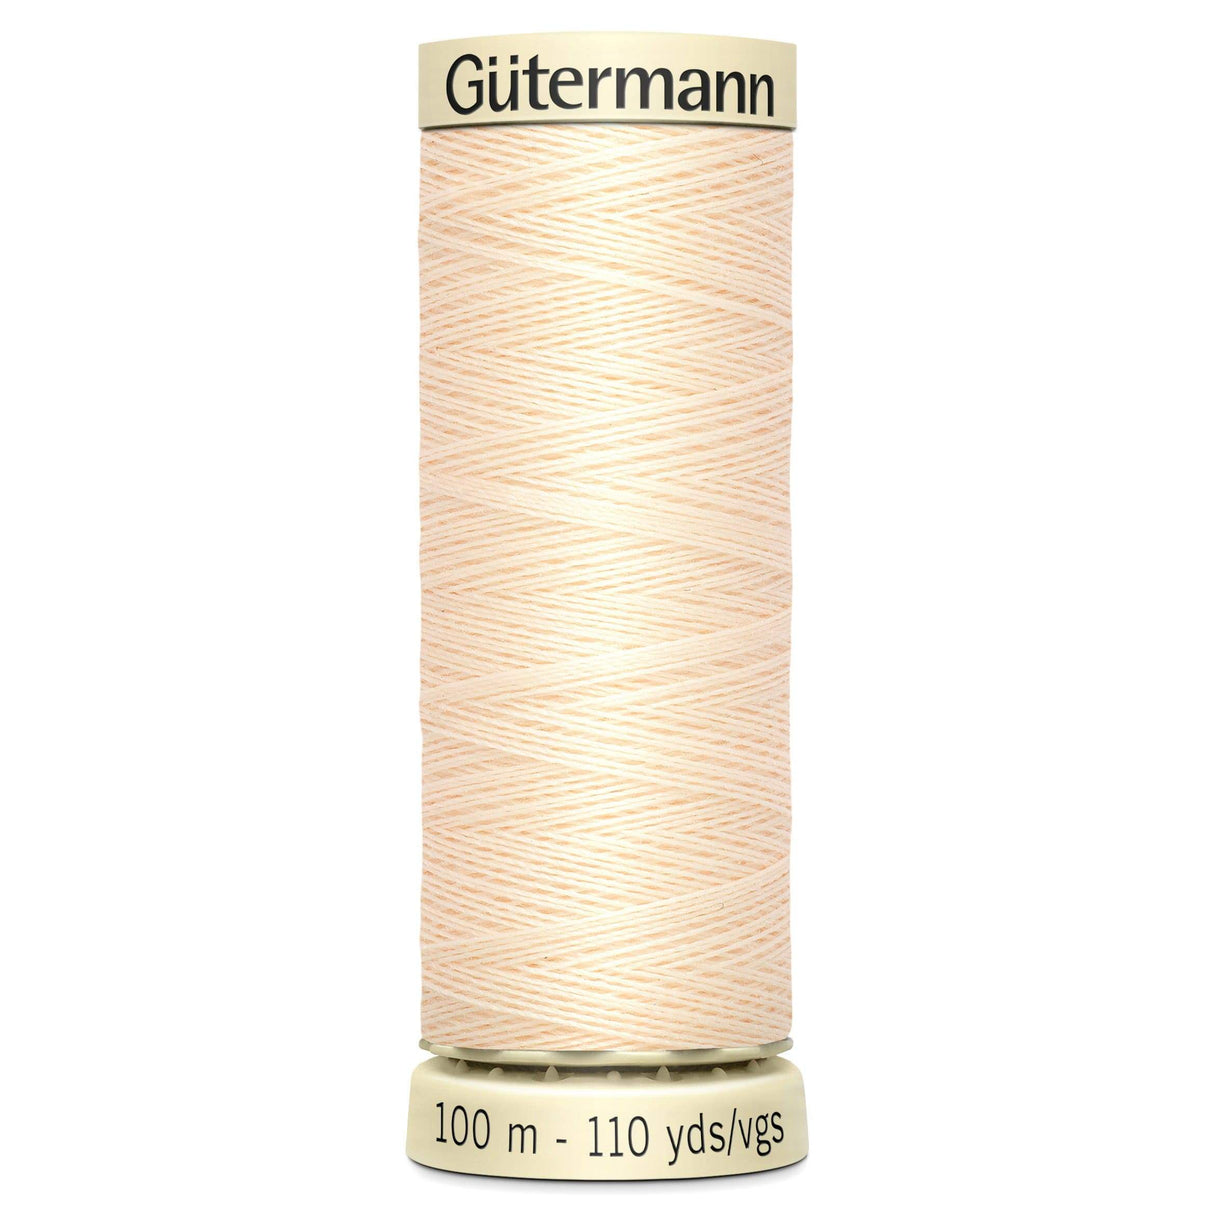 Groves Haberdashery 414 Gutermann Thread Sewing Cotton 100 m Black to Pink